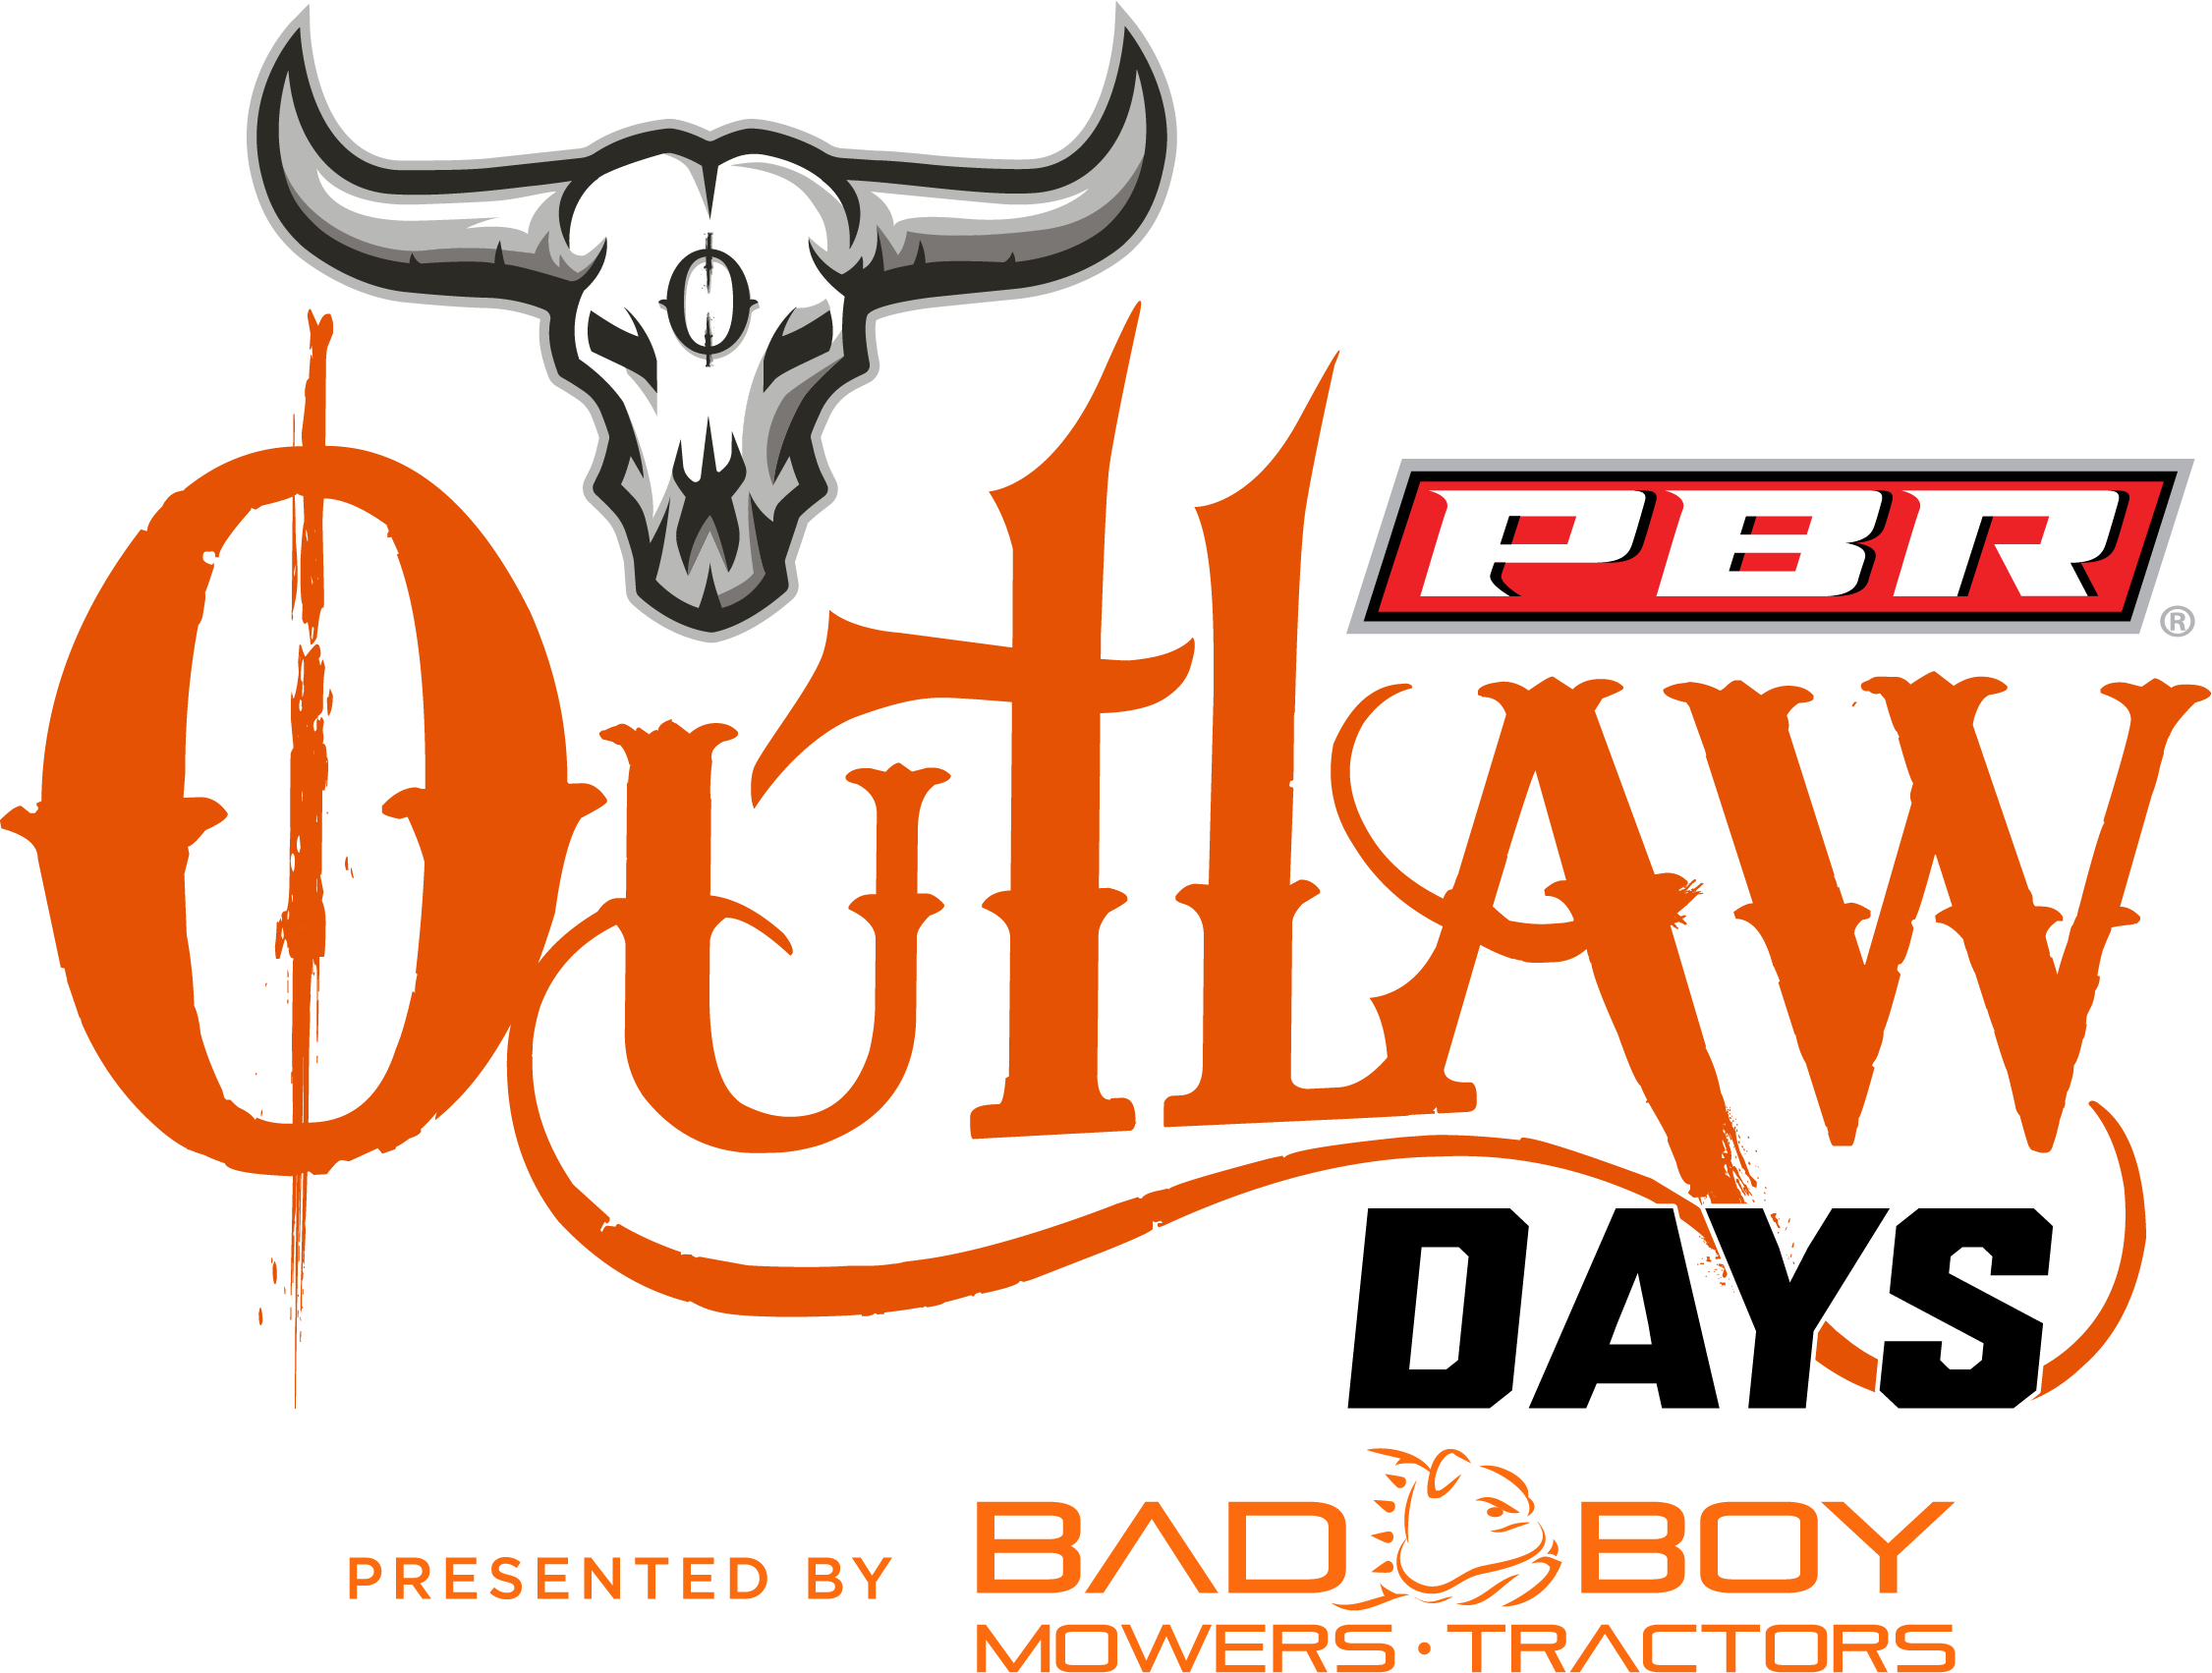 PBR Outlaw Days BBM reversed